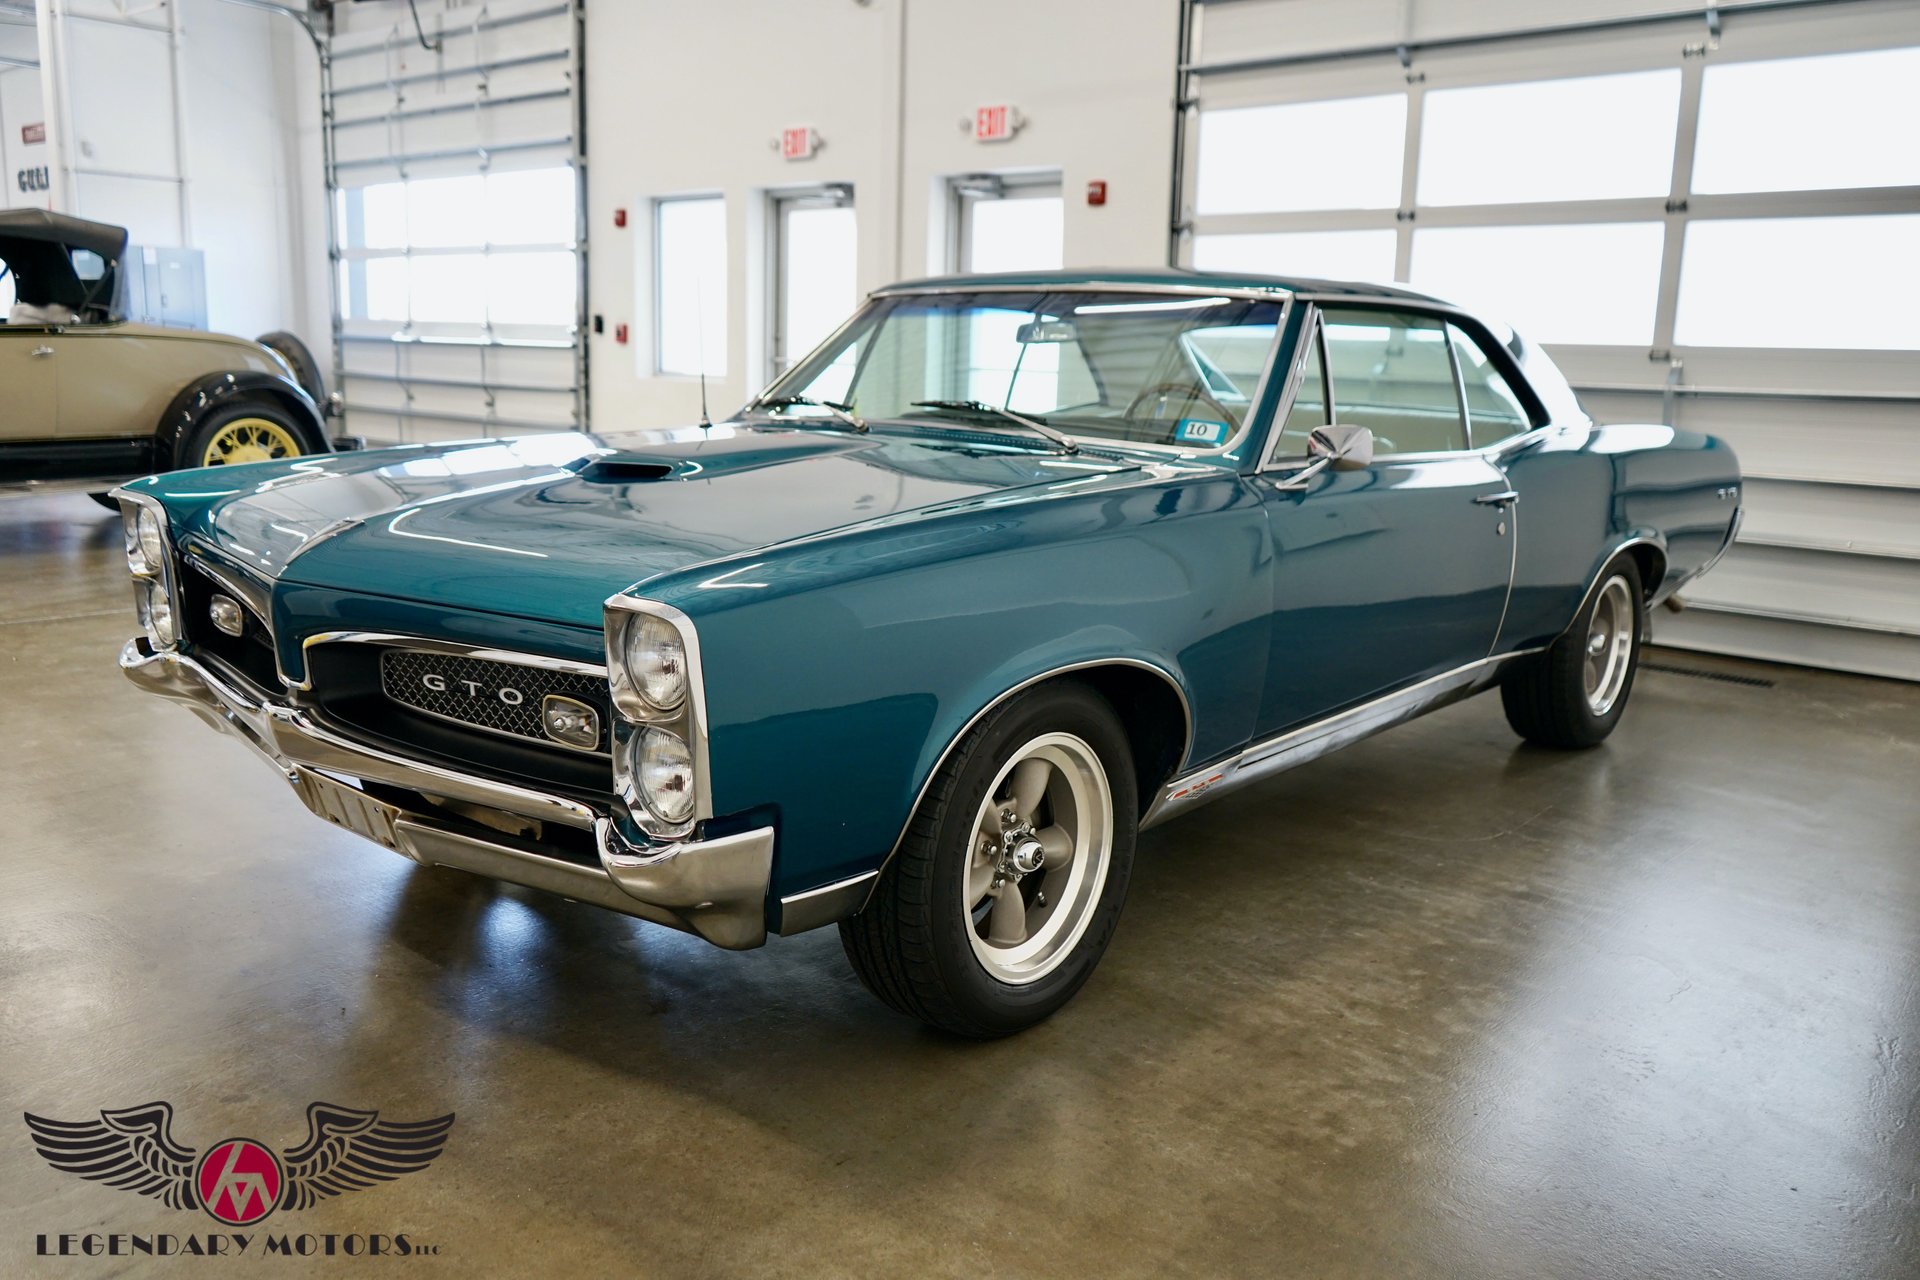 1967 Pontiac GTO | Legendary Motors - Classic Cars, Muscle Cars, Hot Rods &  Antique Cars - Rowley, MA